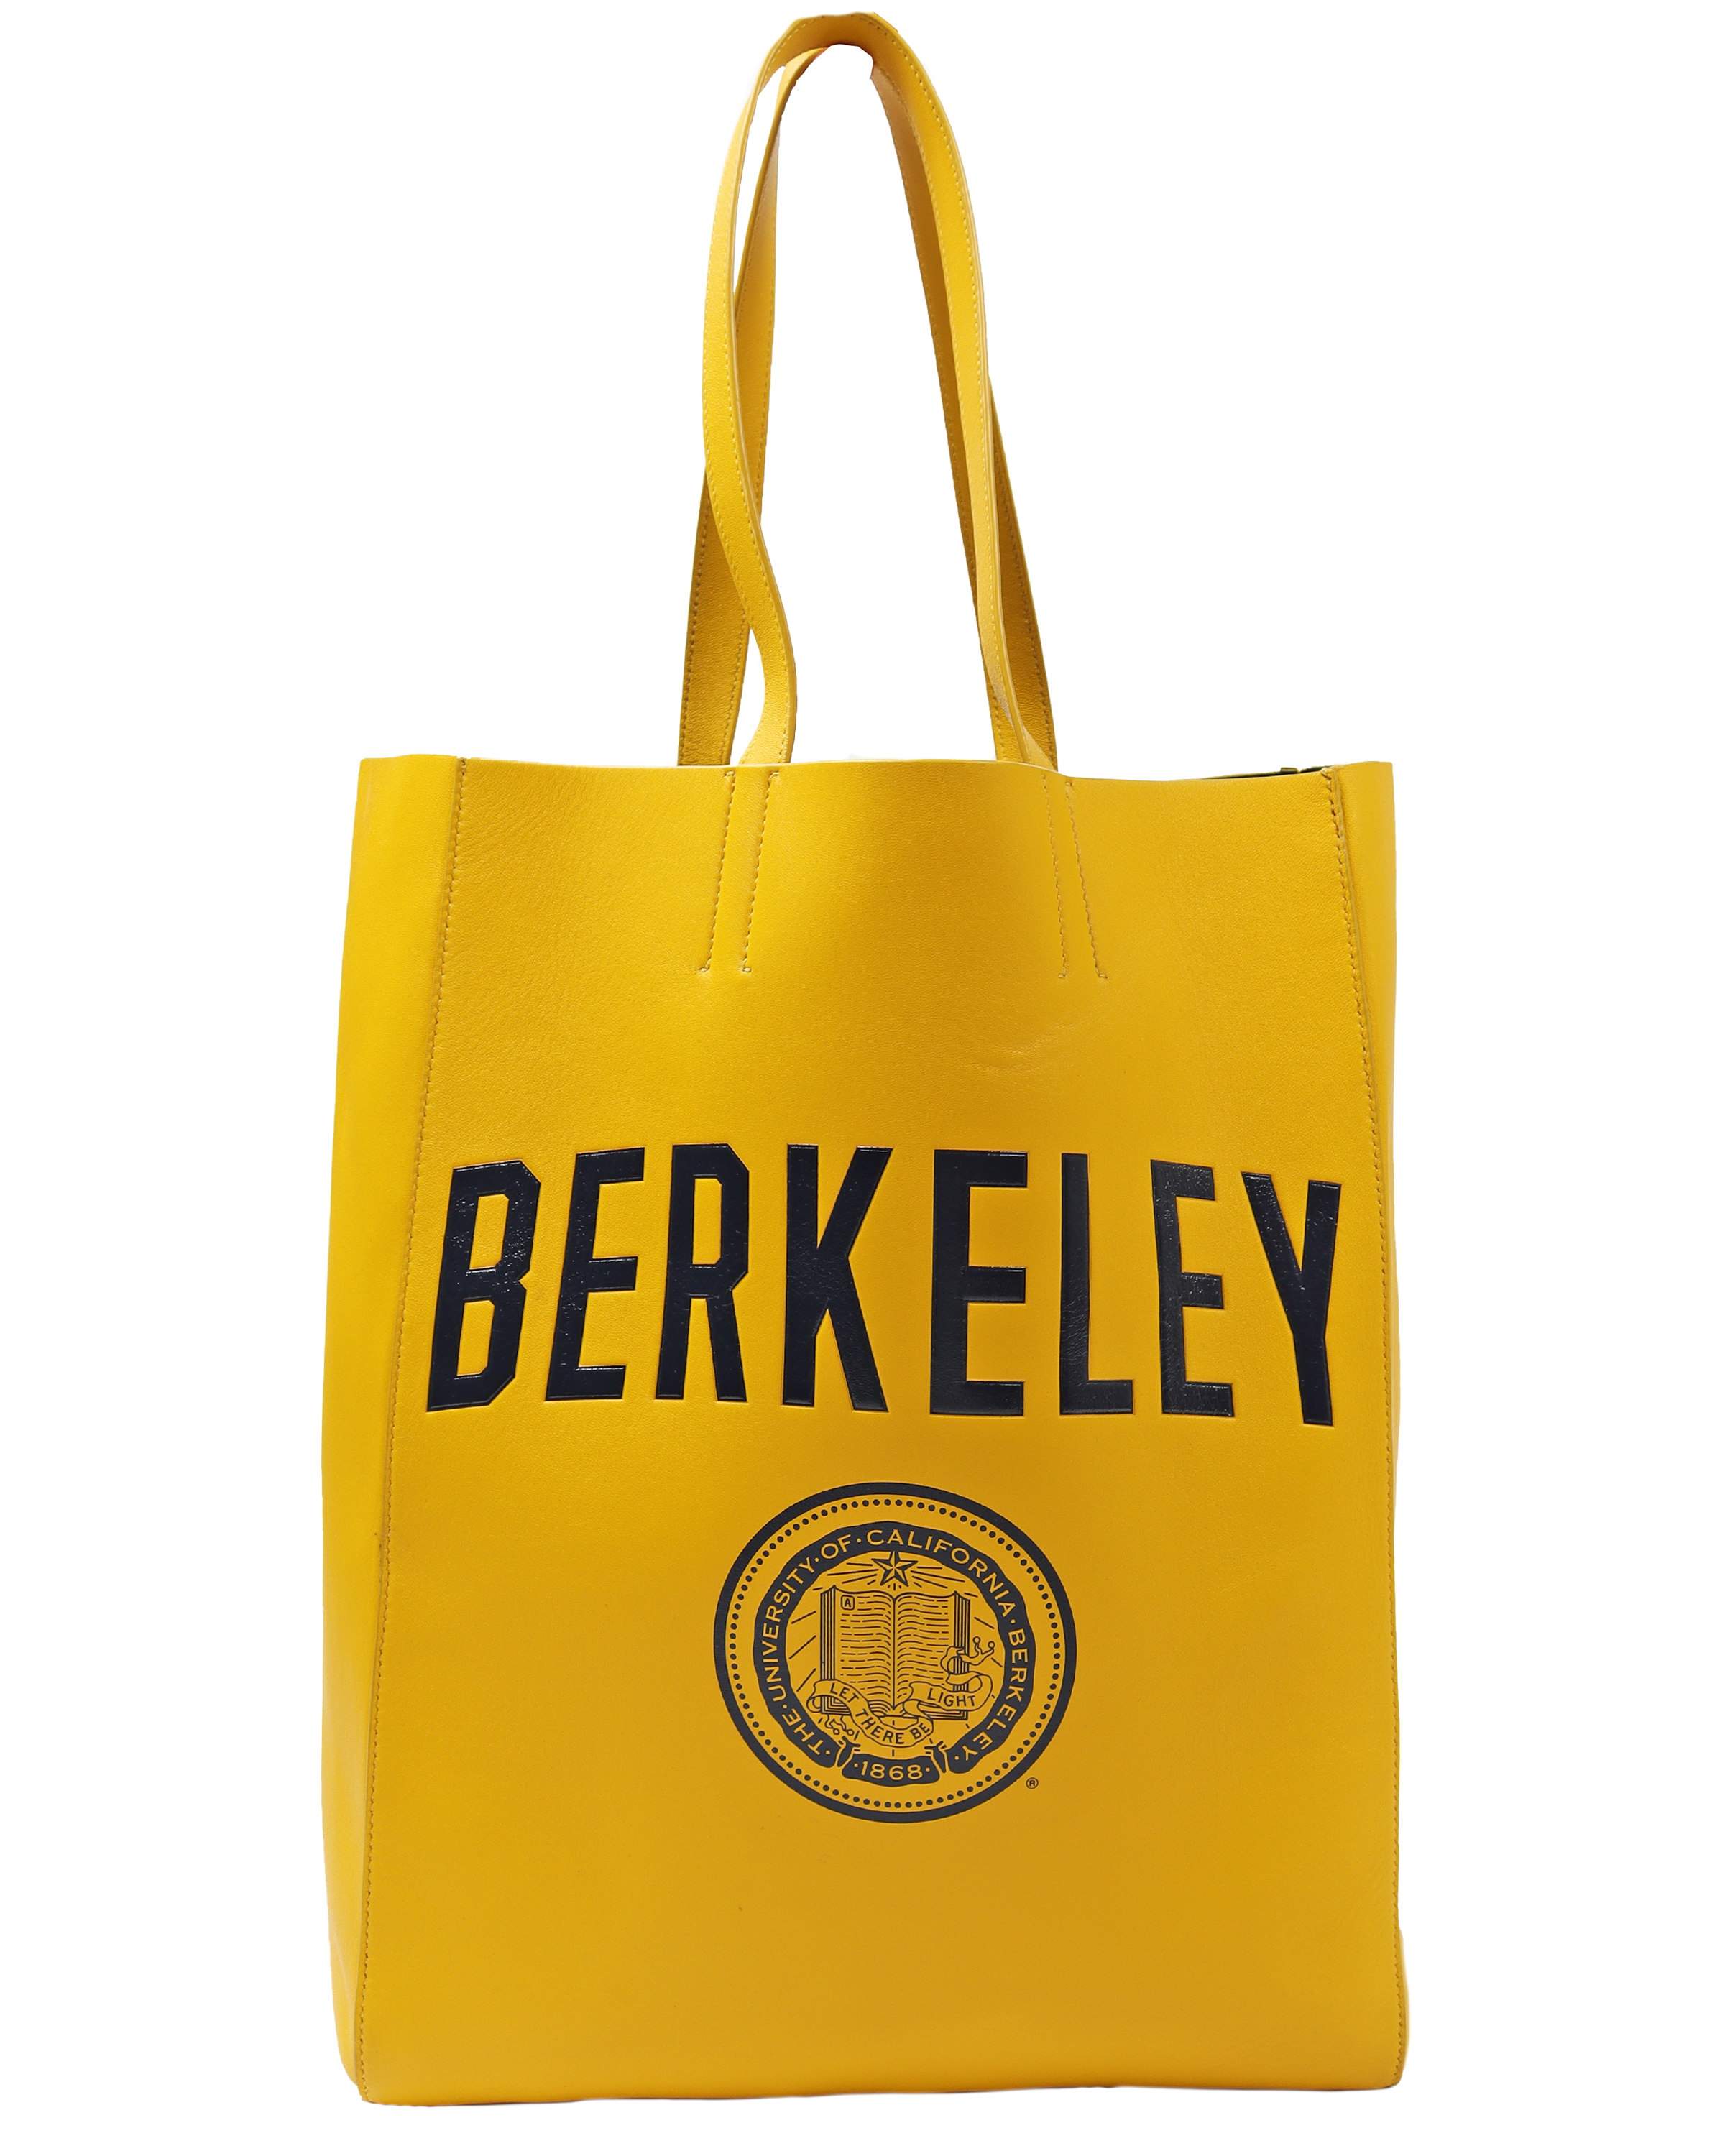 Berkeley Leather Tote Bag